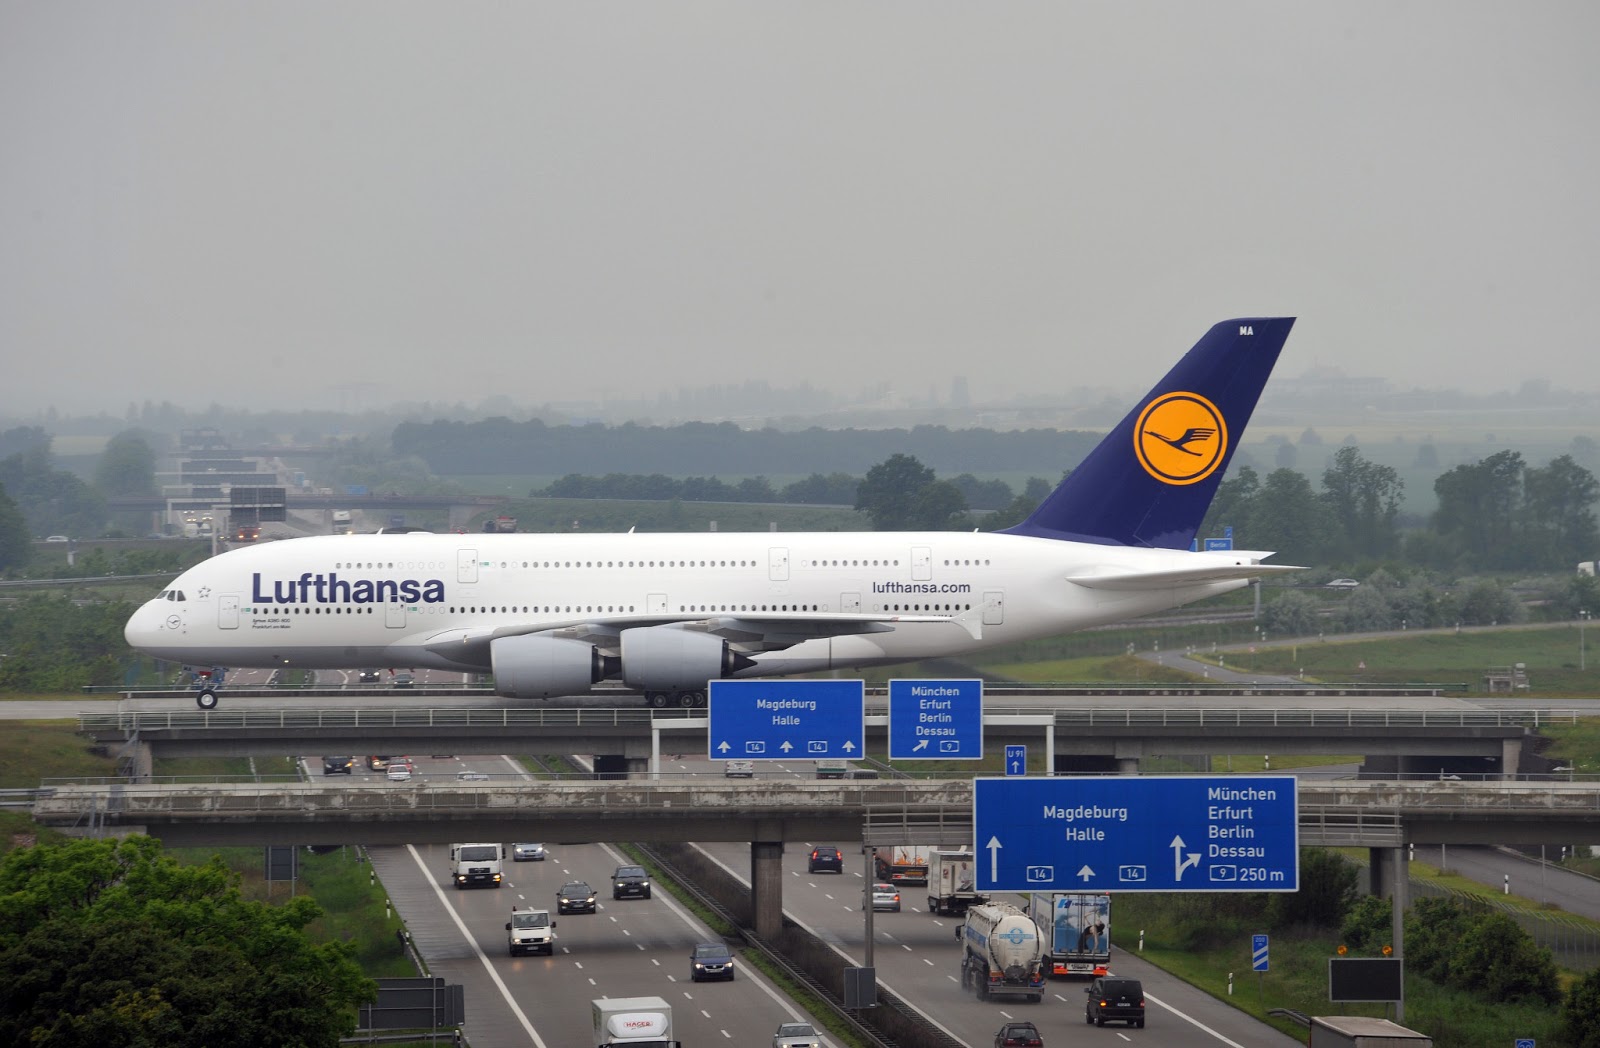 Airbus A380 #05